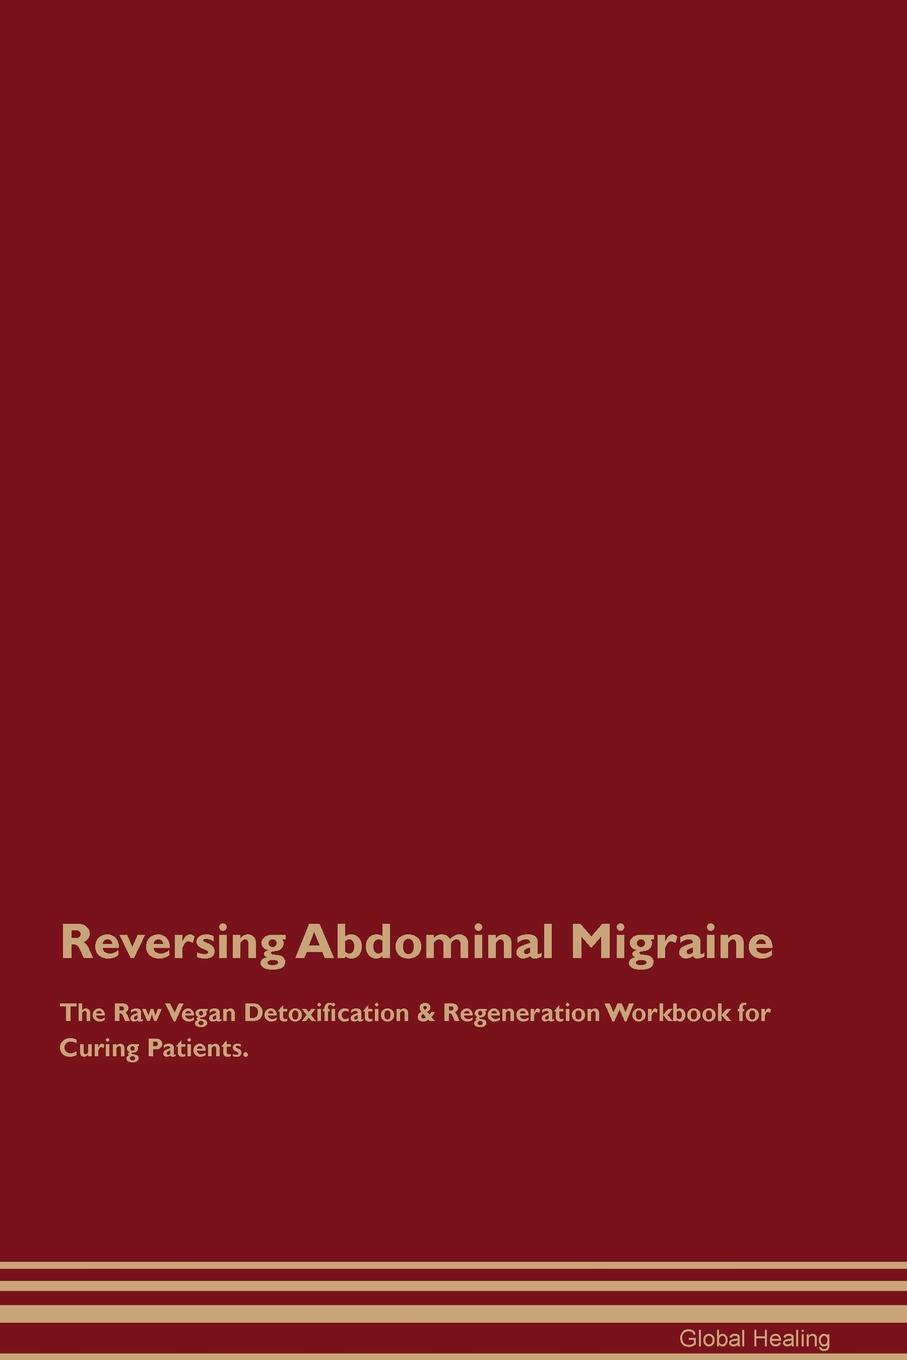 Reversing Abdominal Migraine The Raw Vegan Detoxification & Regeneration Workbook for Curing Patients